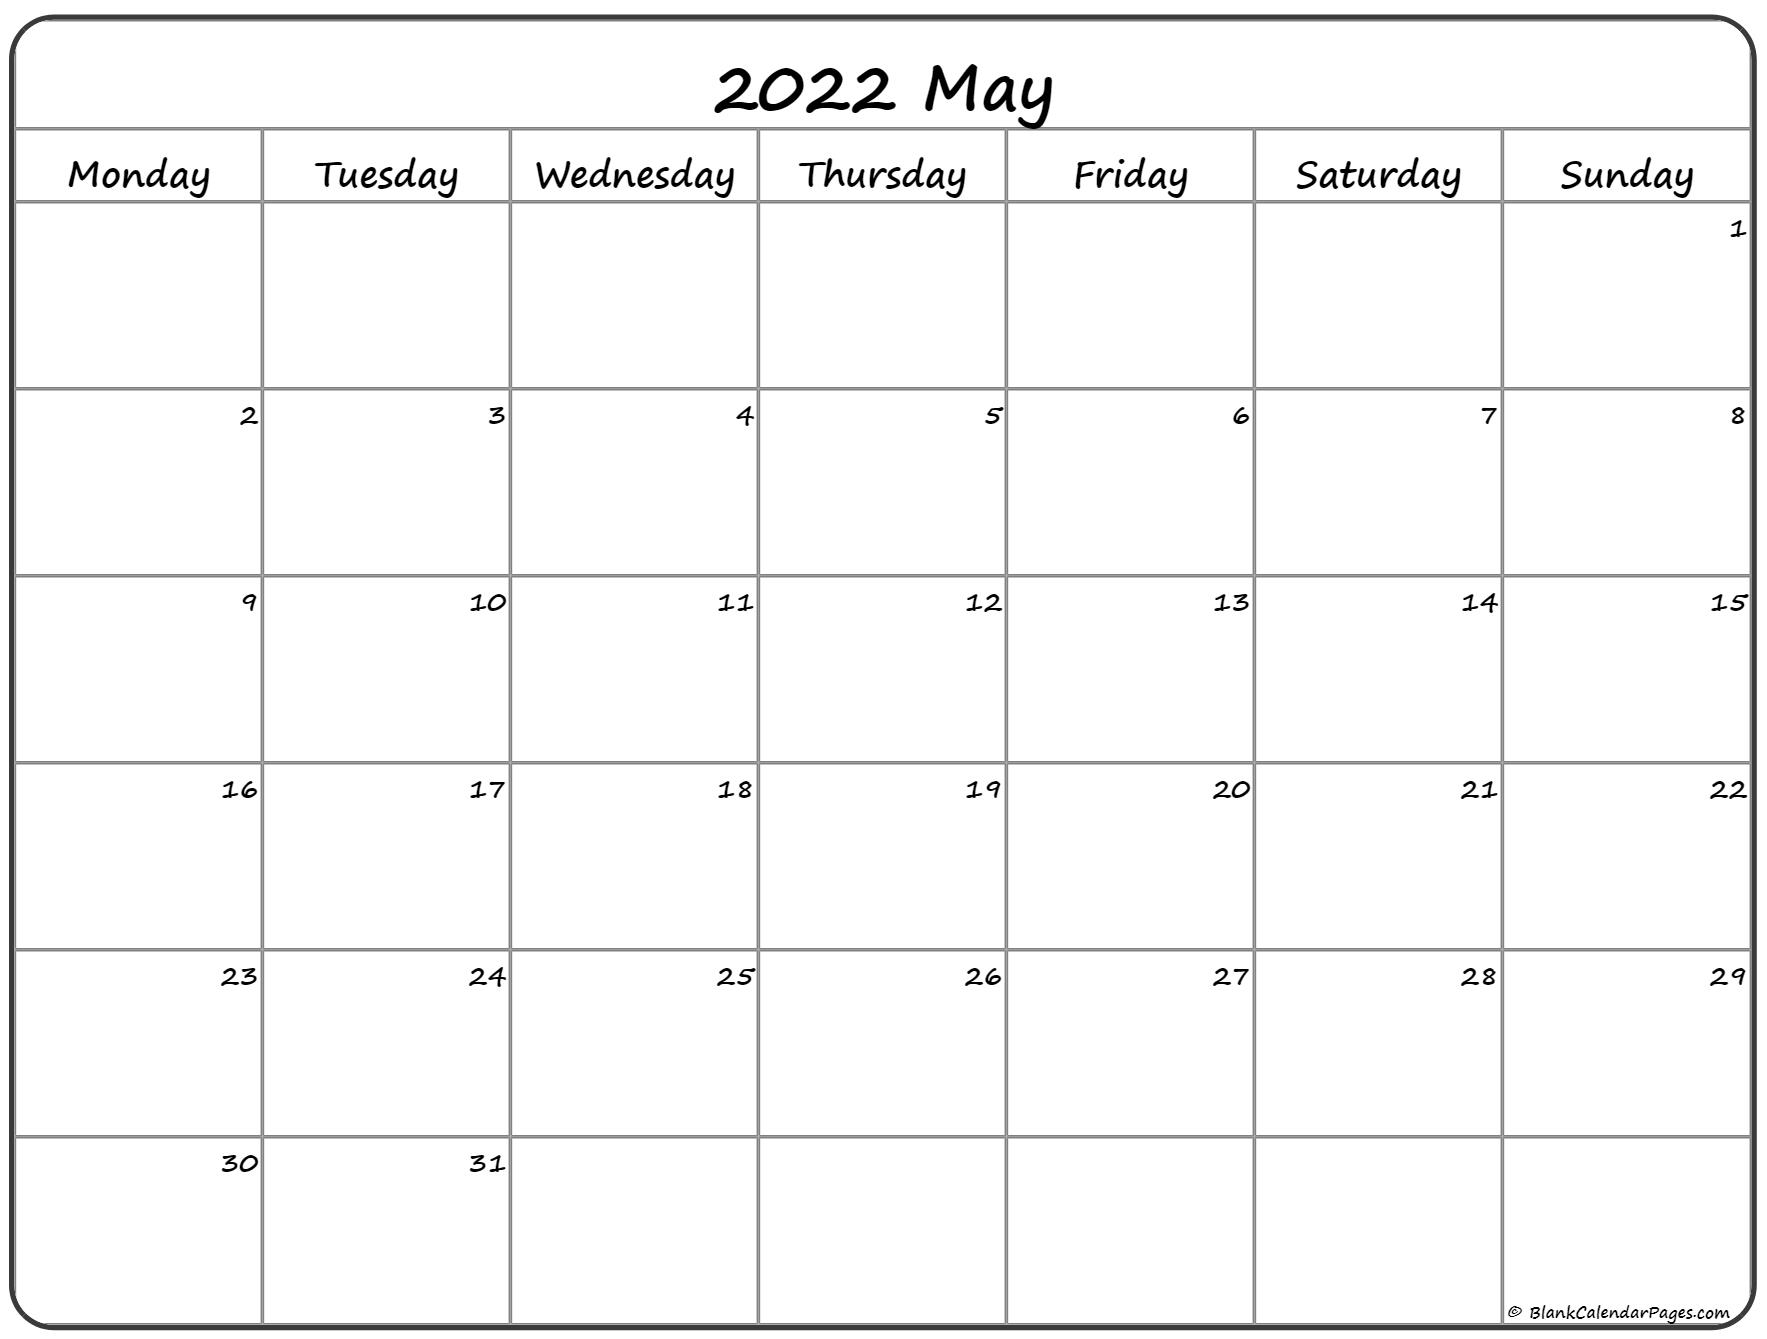 May 2022 Monday Calendar | Monday To Sunday throughout Printable May Calendar From Monday To Sunday